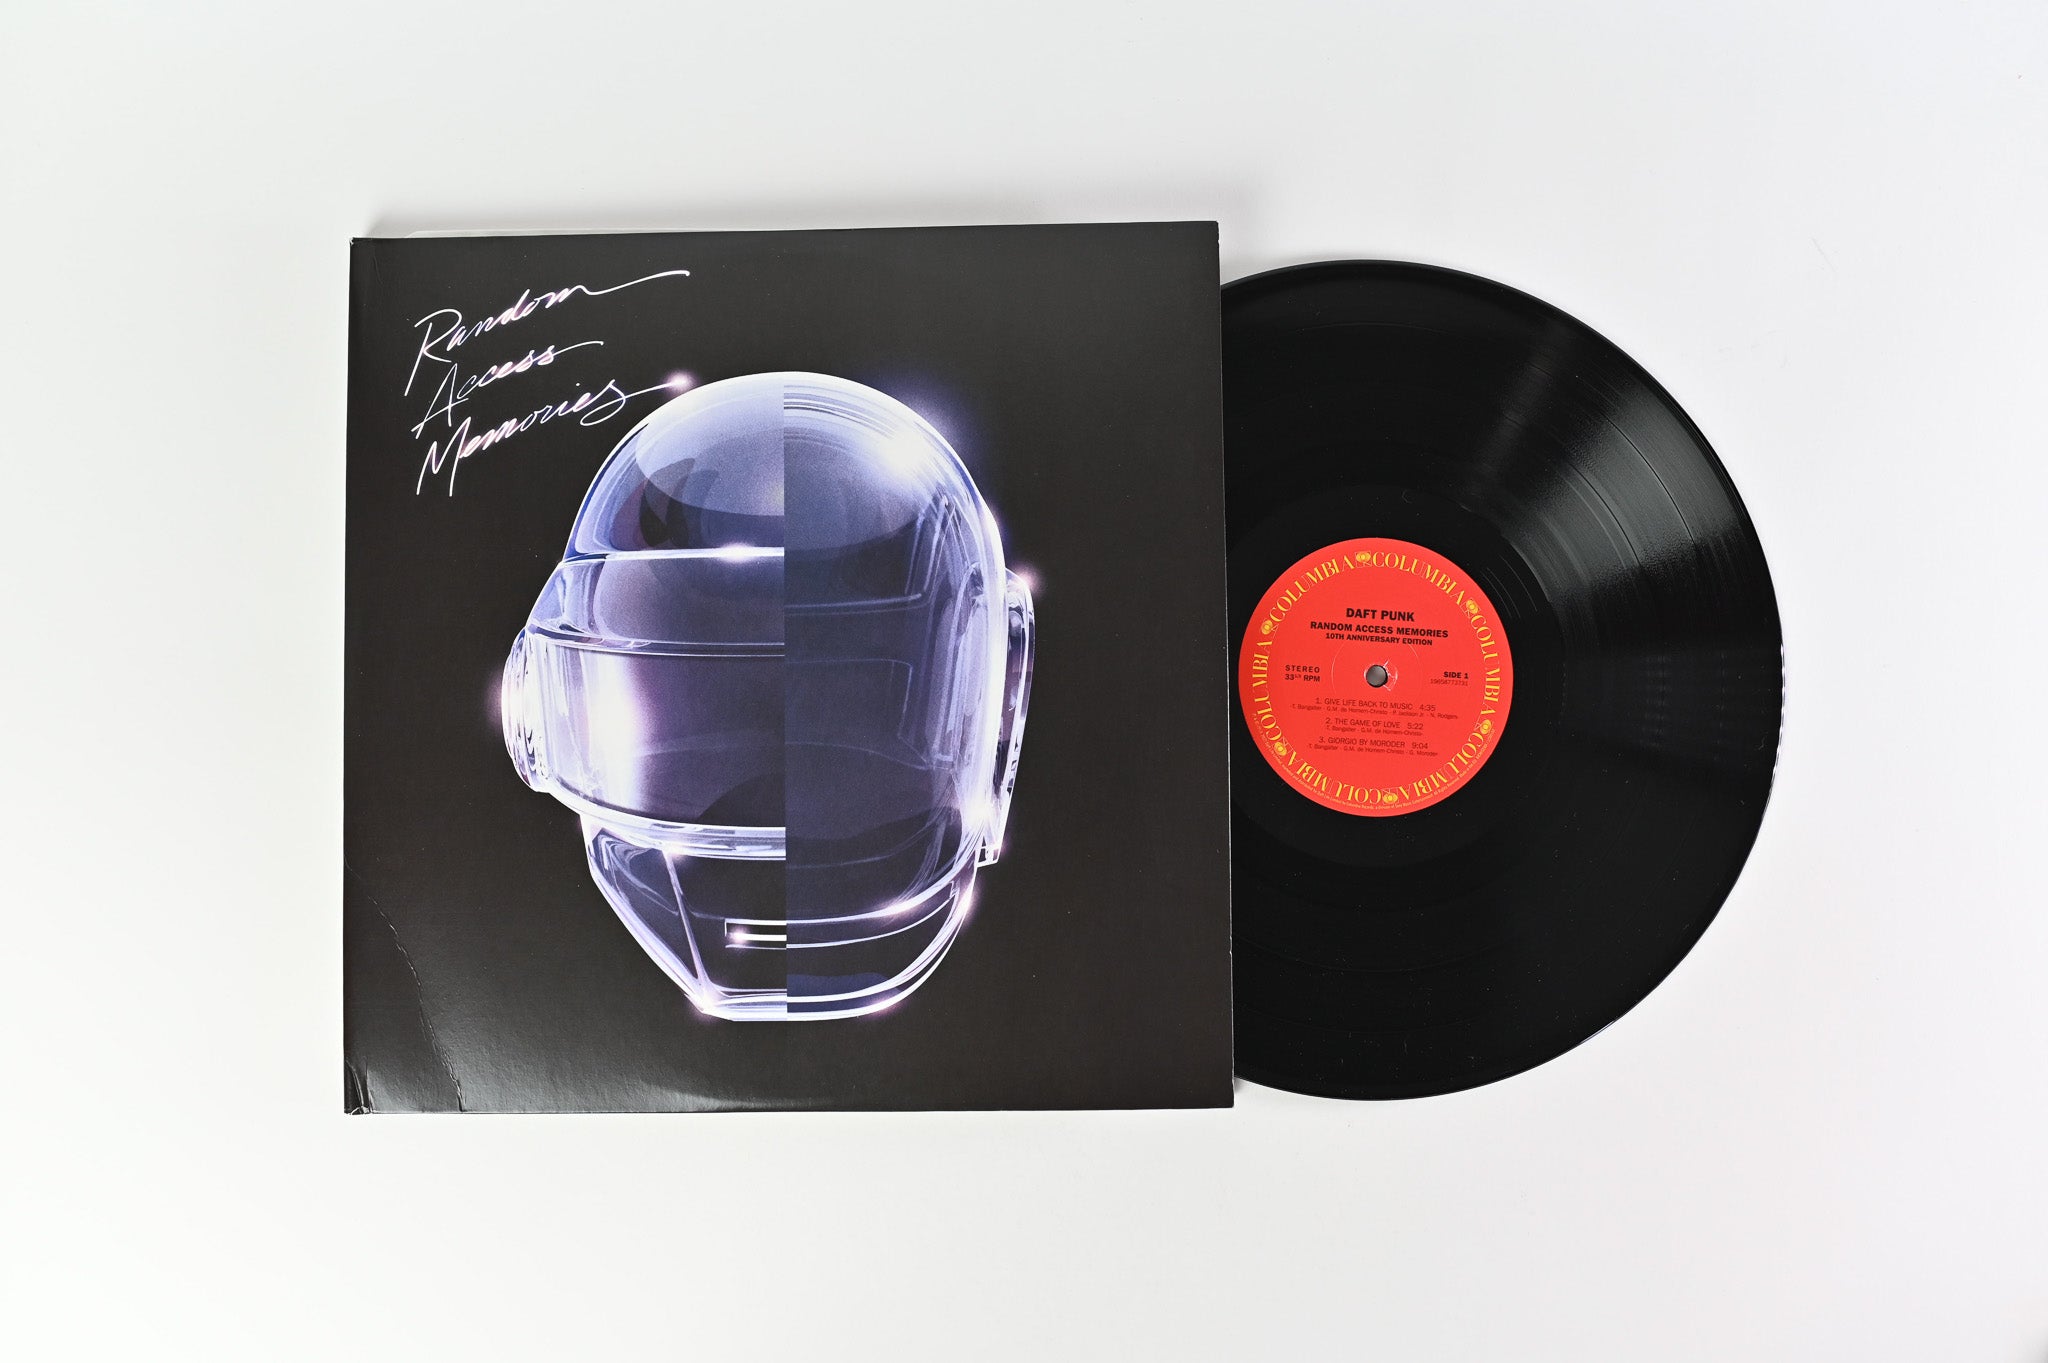 Daft Punk - Random Access Memories (10th Anniversary Edition) Reissue on Columbia